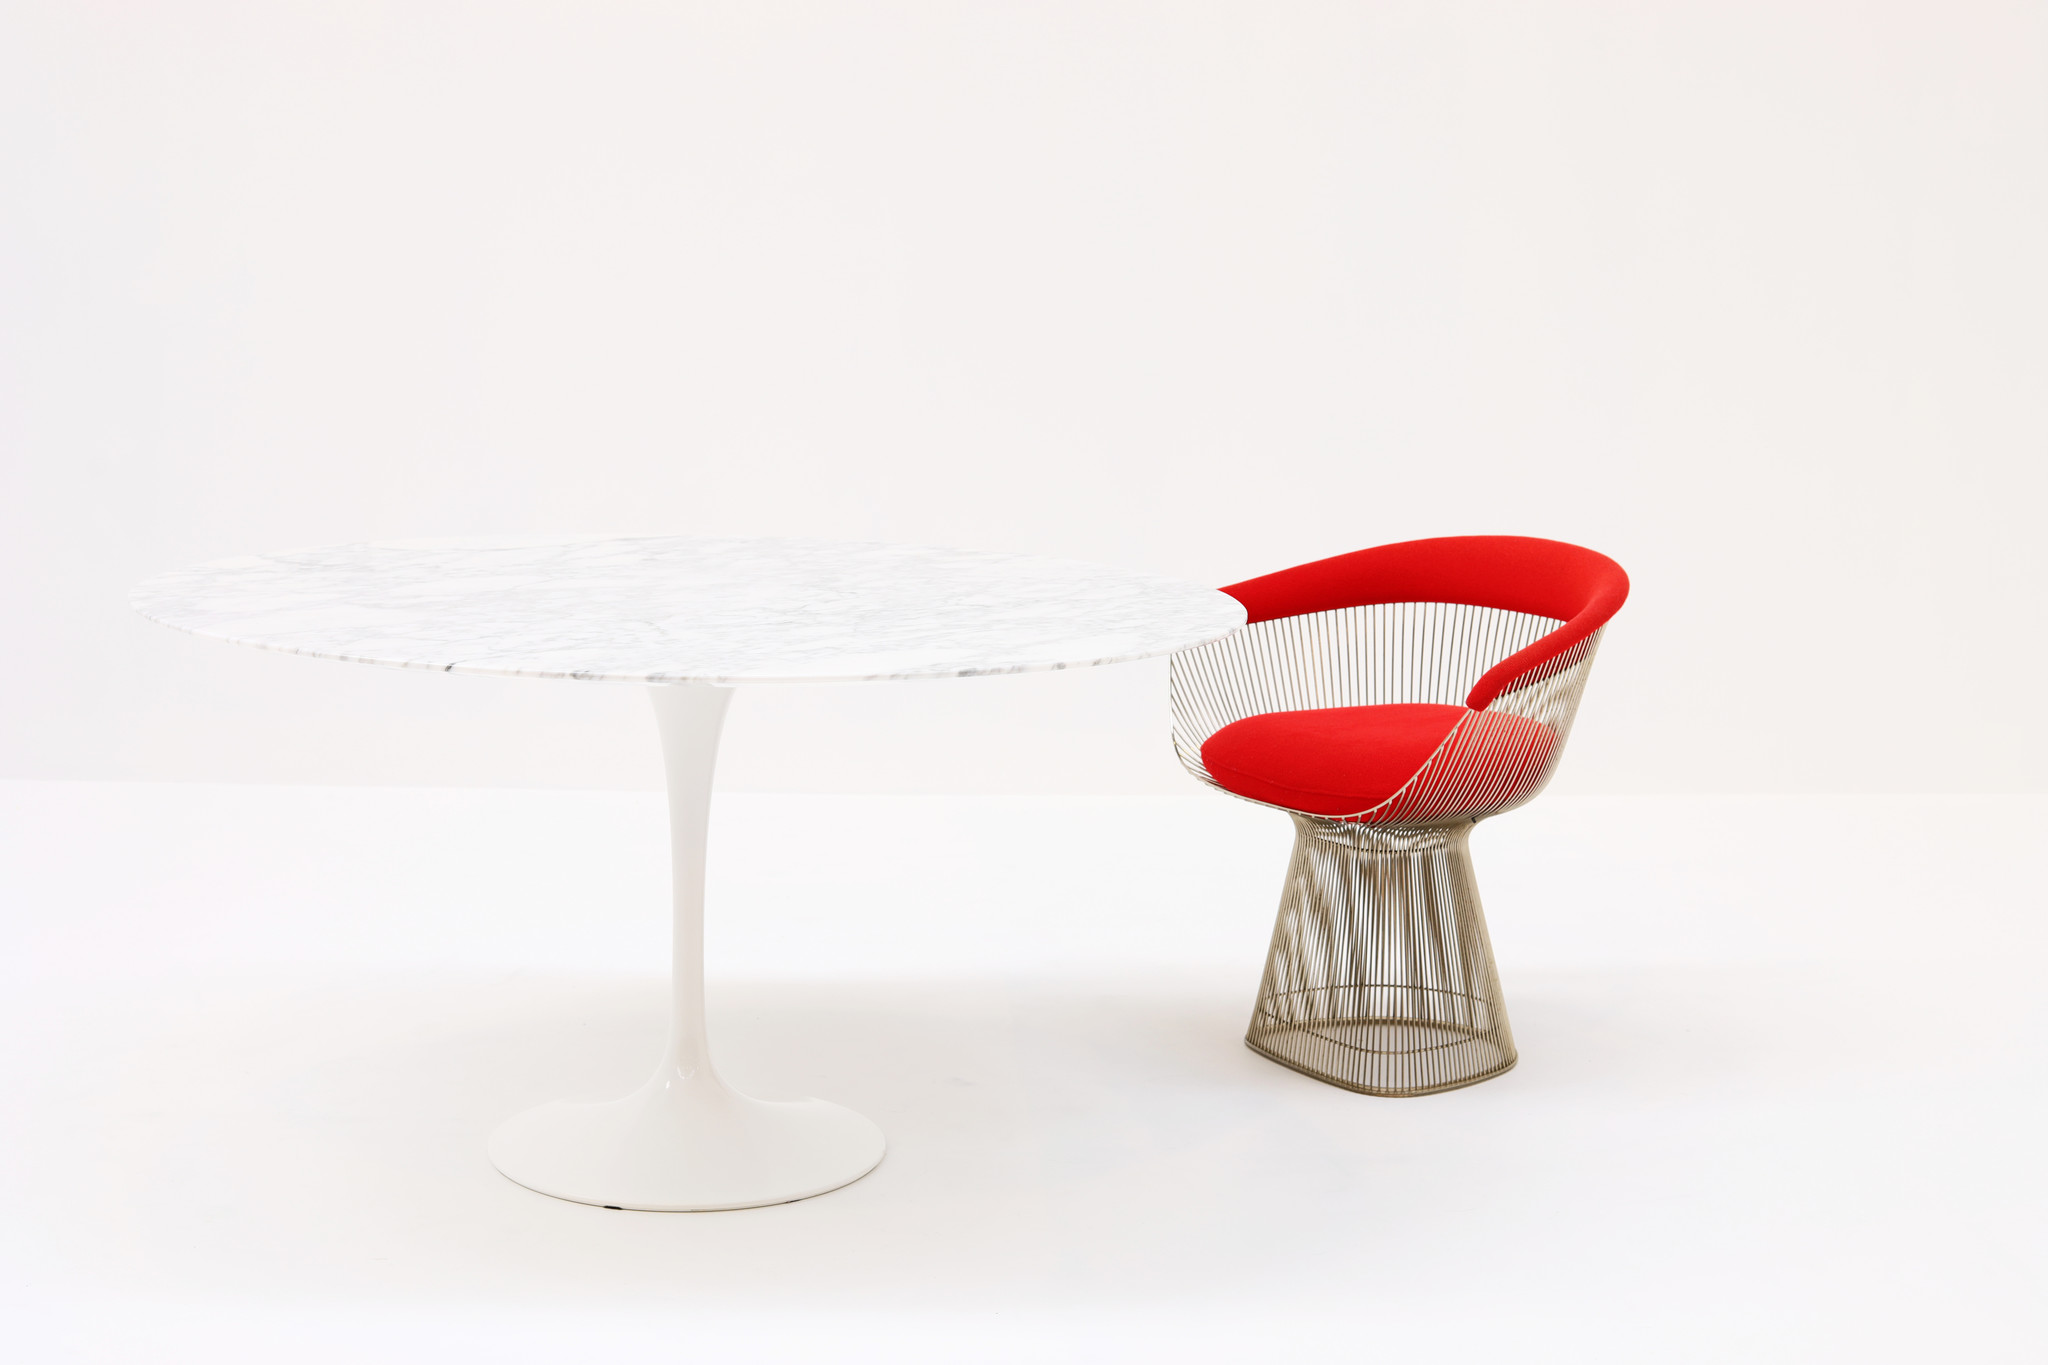 Marble Knoll Tulip table designed by Eero Saarinen